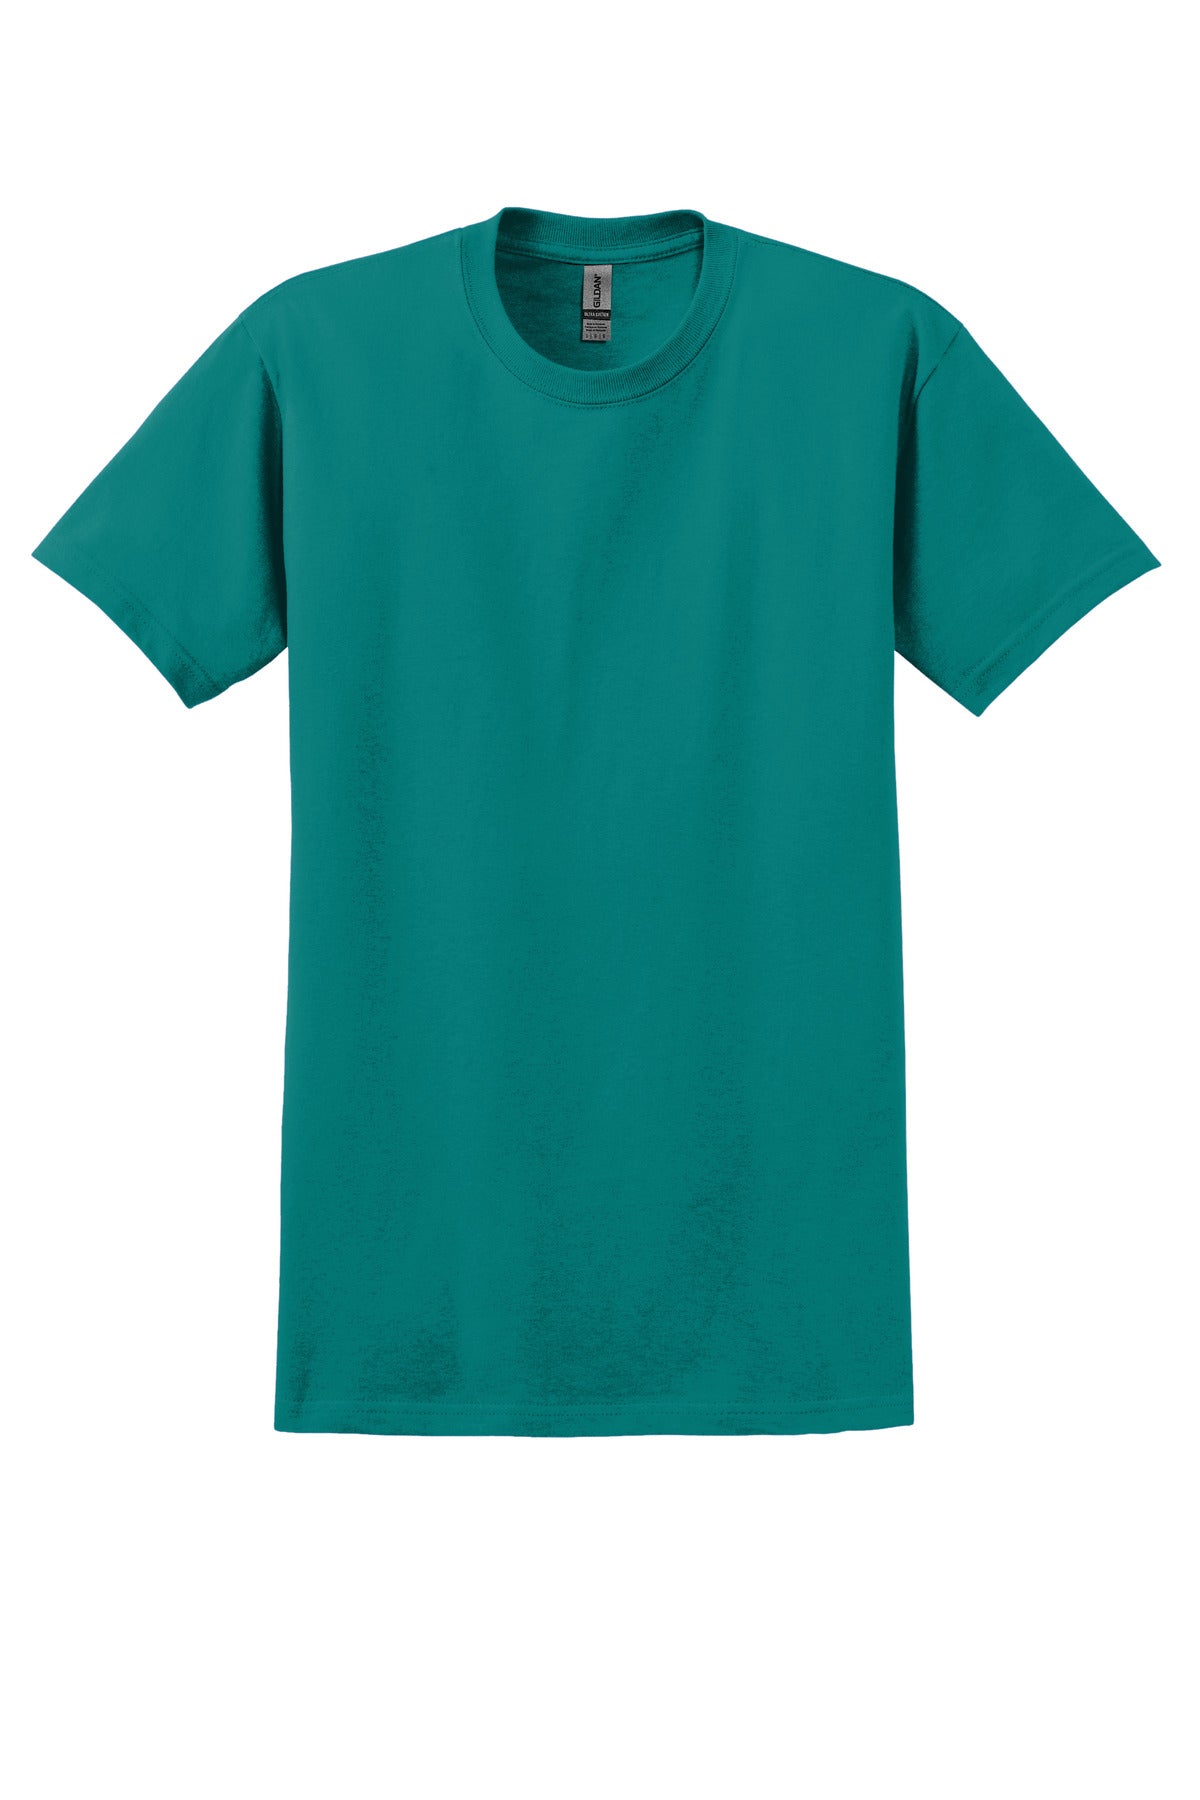 Gildan - Ultra Cotton 100% US Cotton T-Shirt. 2000 - Jade Dome